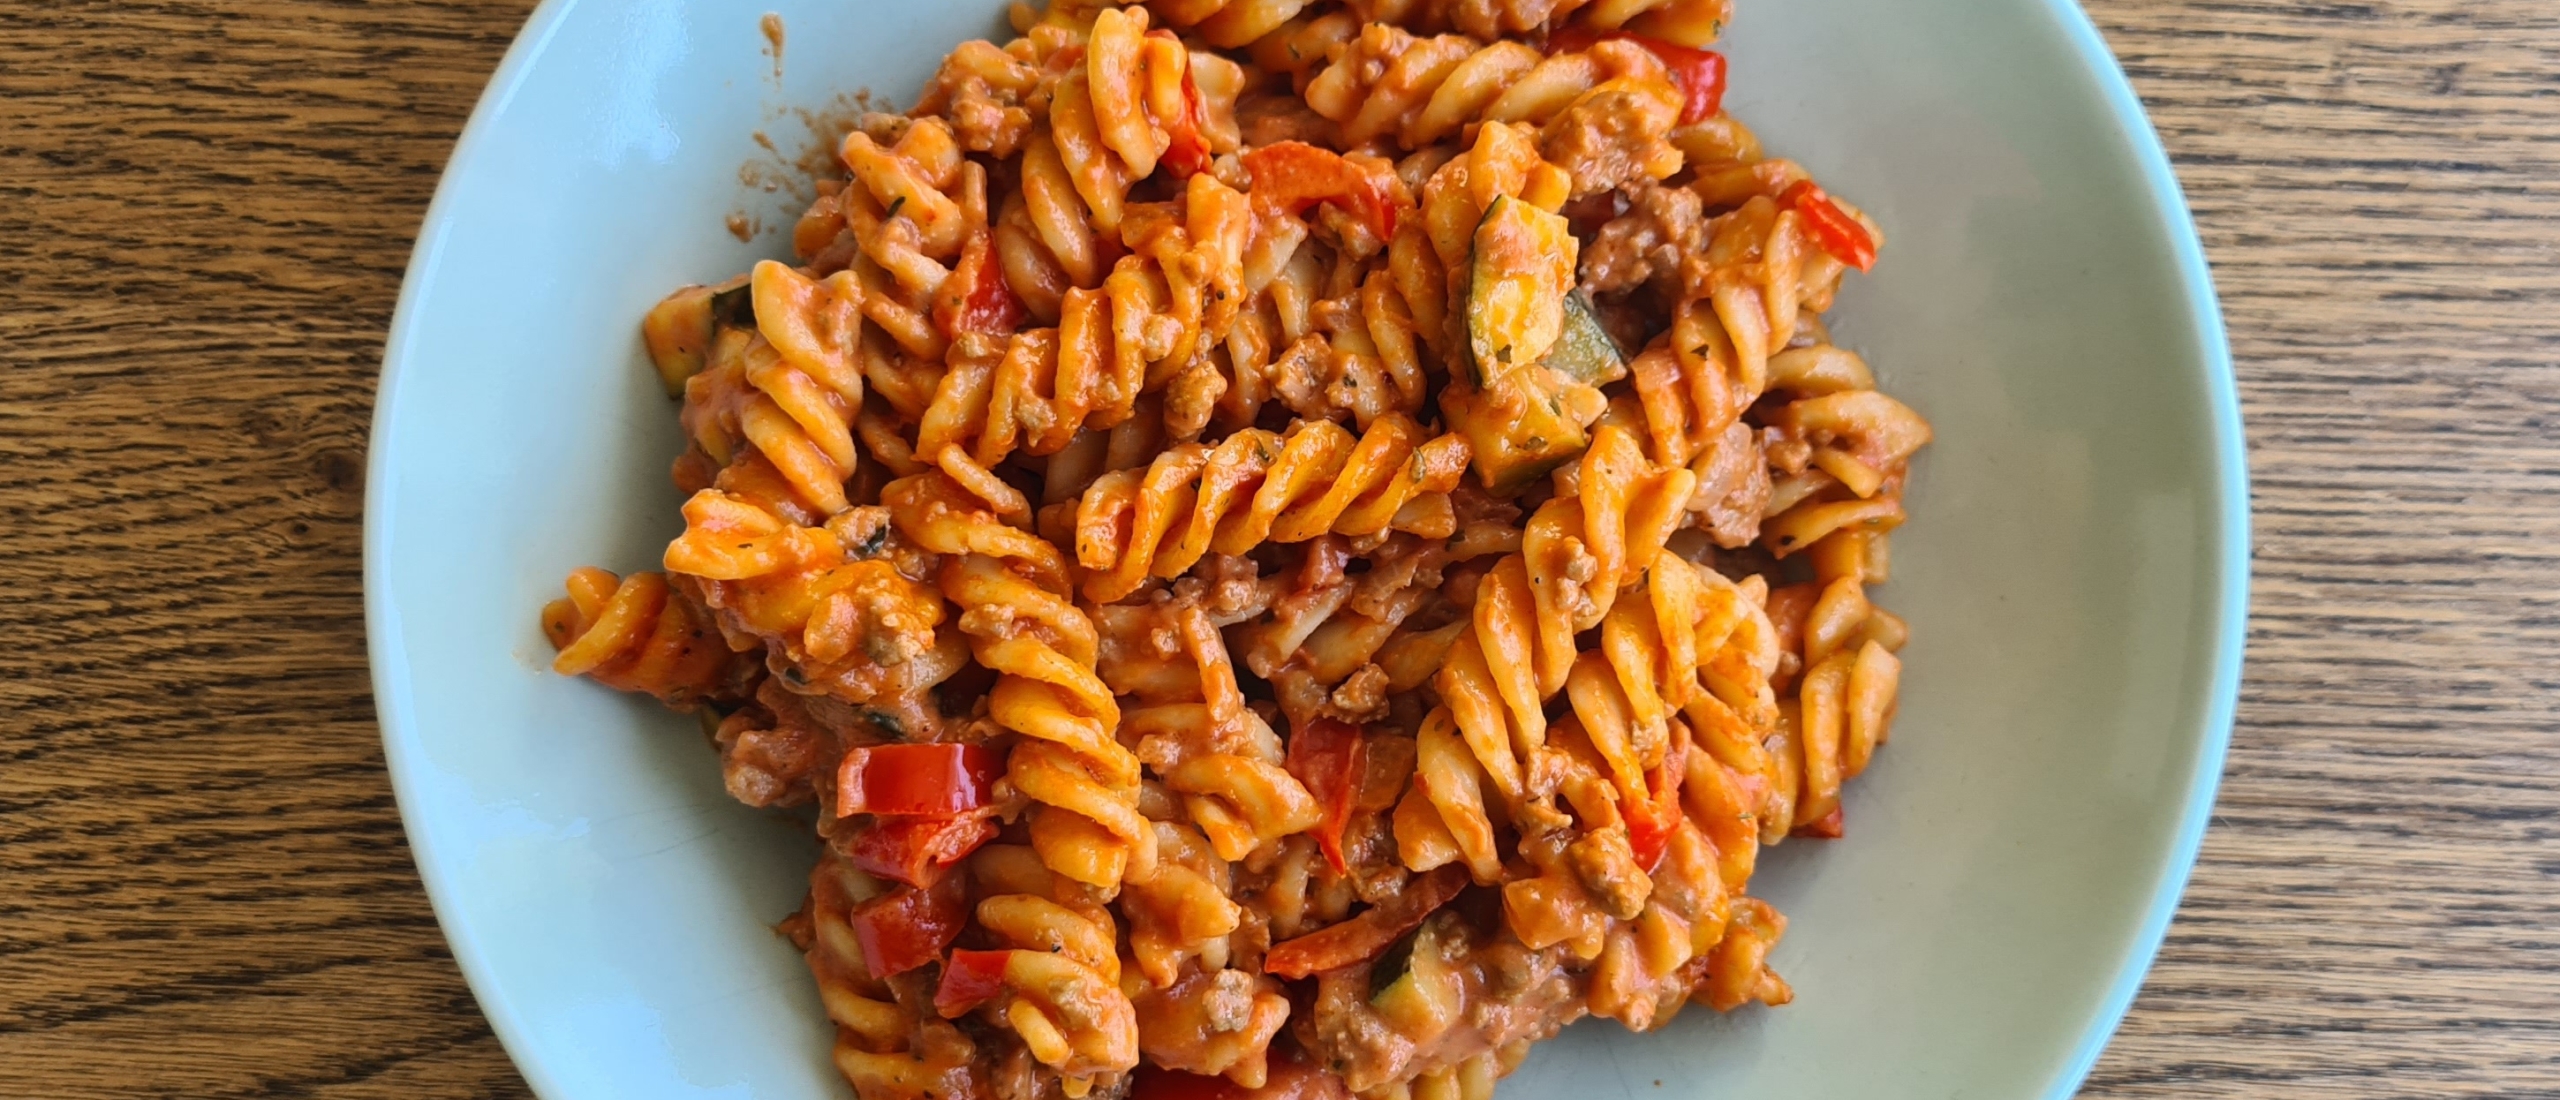 Simpele pasta met romige tomatensaus, gehakt, courgette en paprika